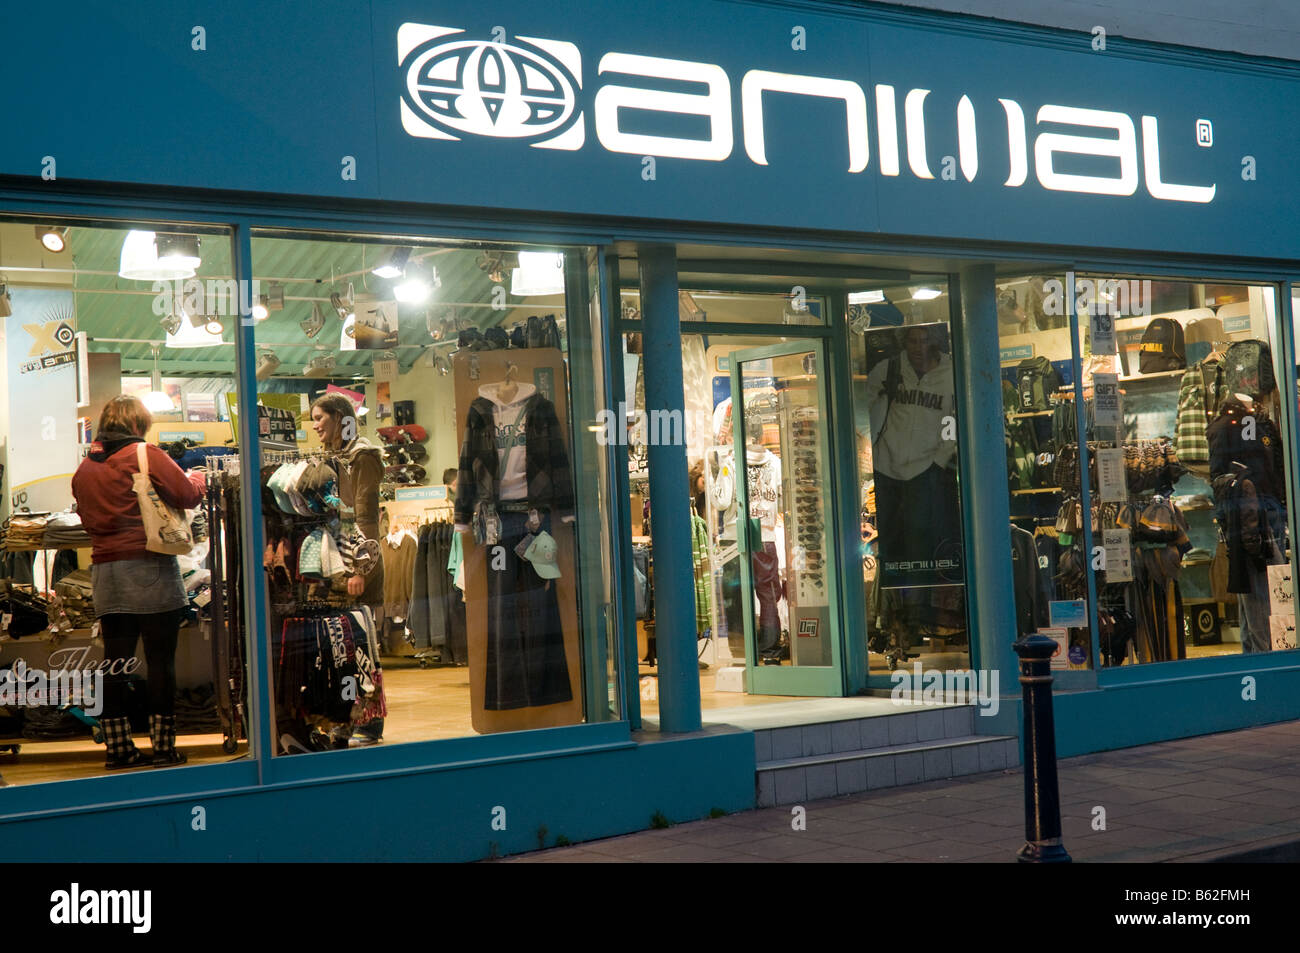 ANIMAL outdoor and surf designer clothing store UK Stock Photo - Alamy